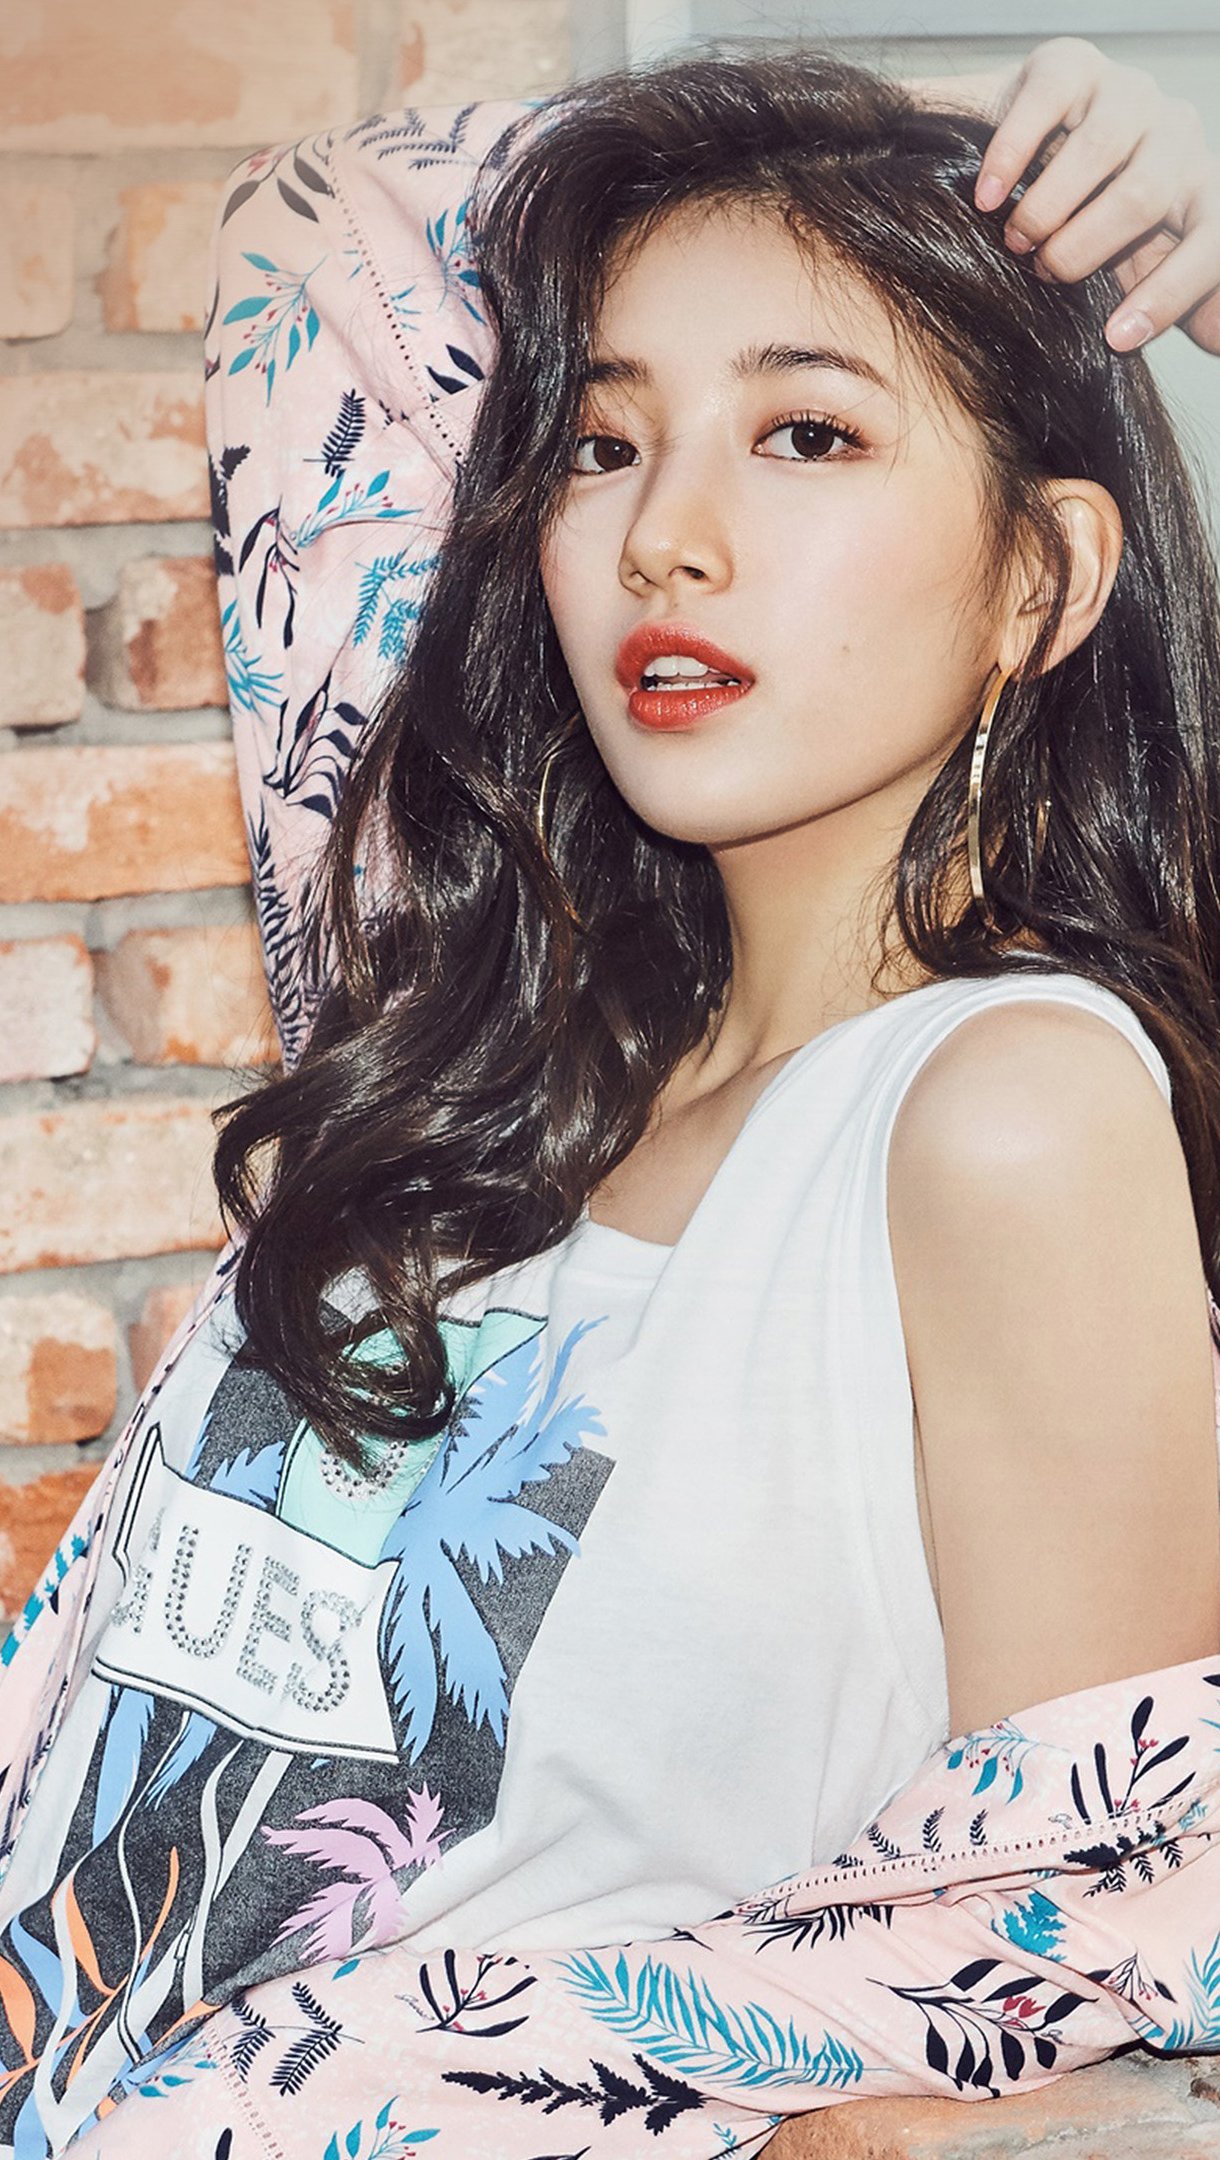 Suzy korean actress with make up Wallpaper 4k Ultra HD ID:4290